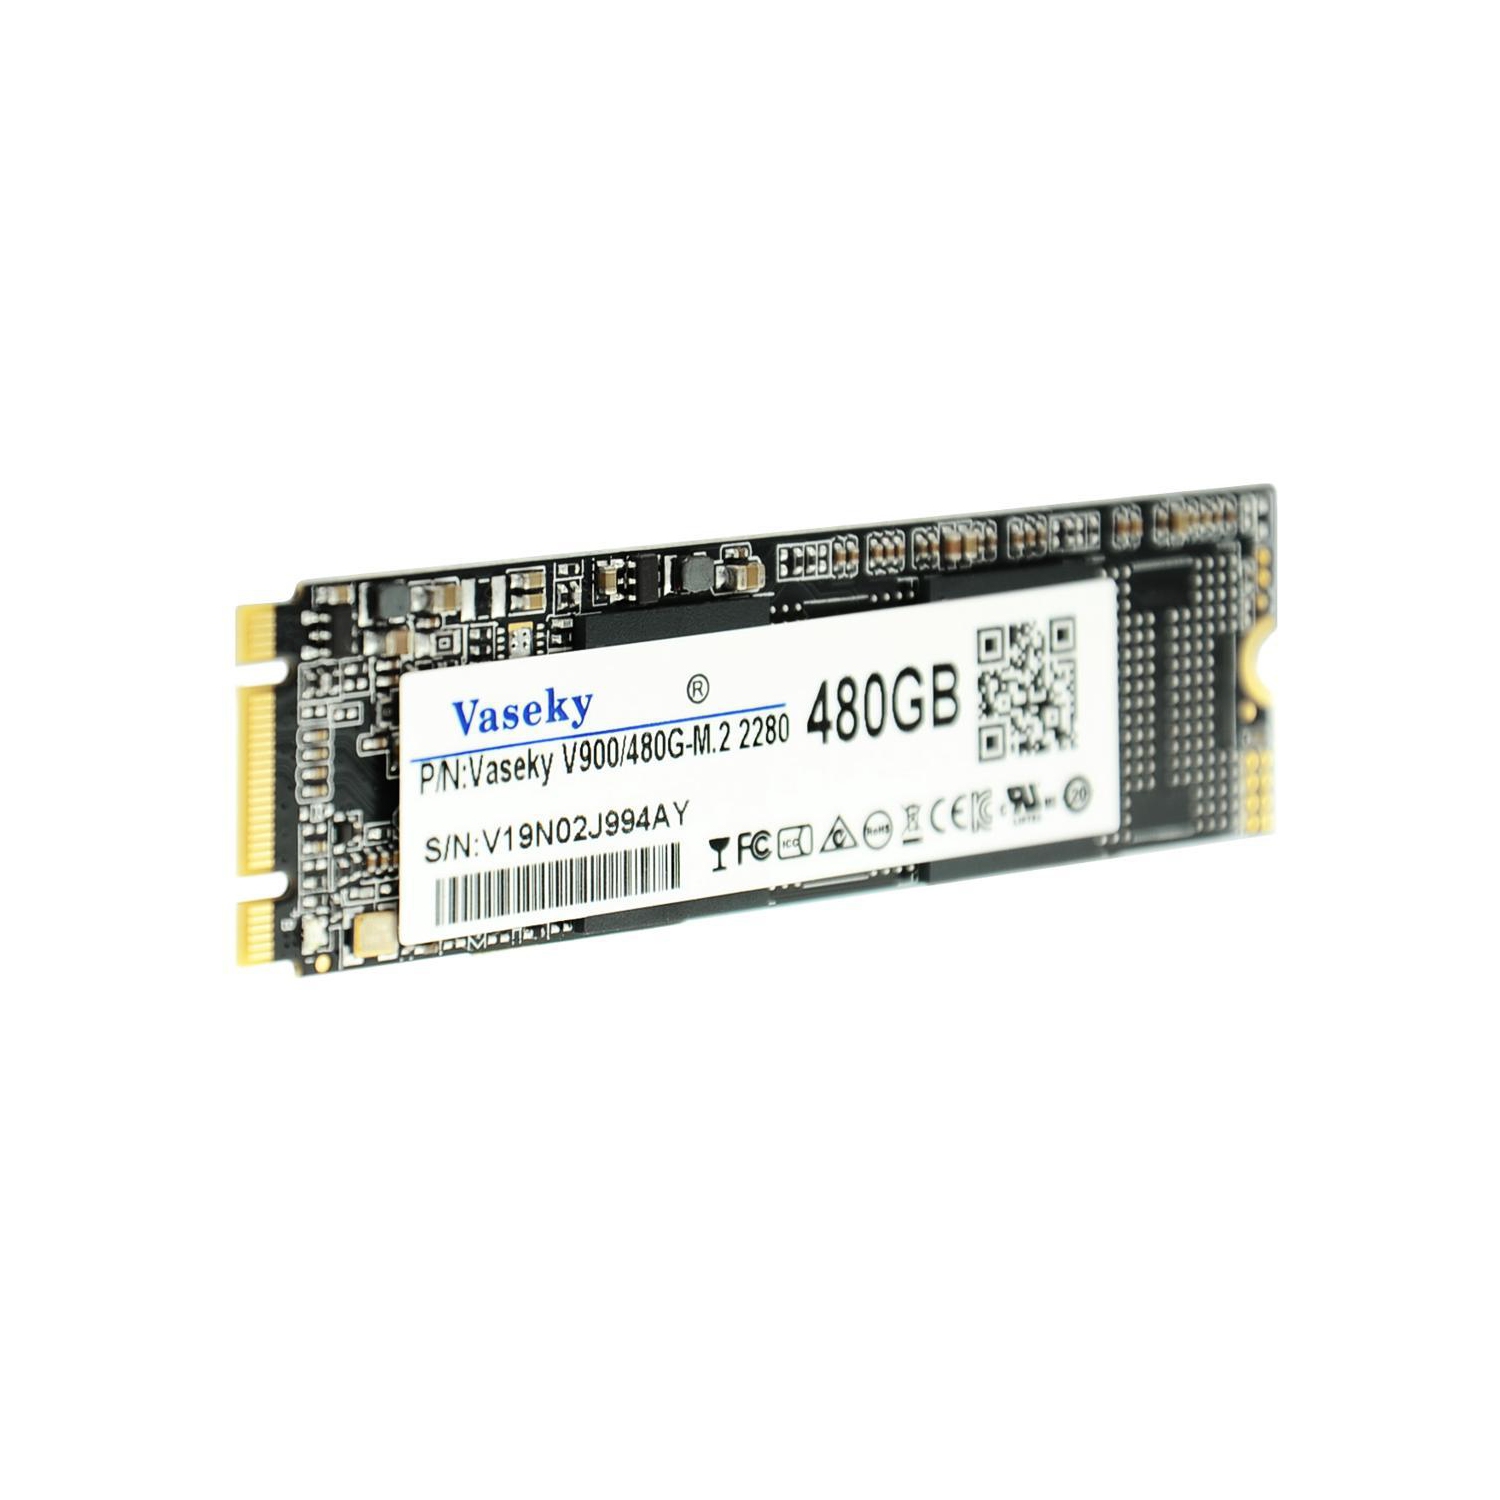 Vaseky M.2 2280 SATA 480G SSD TLC Internal Solid State Drive (SSD) for Desktop Notebook Standard M.2 SATA 480GB SSD TLC Storage Grain